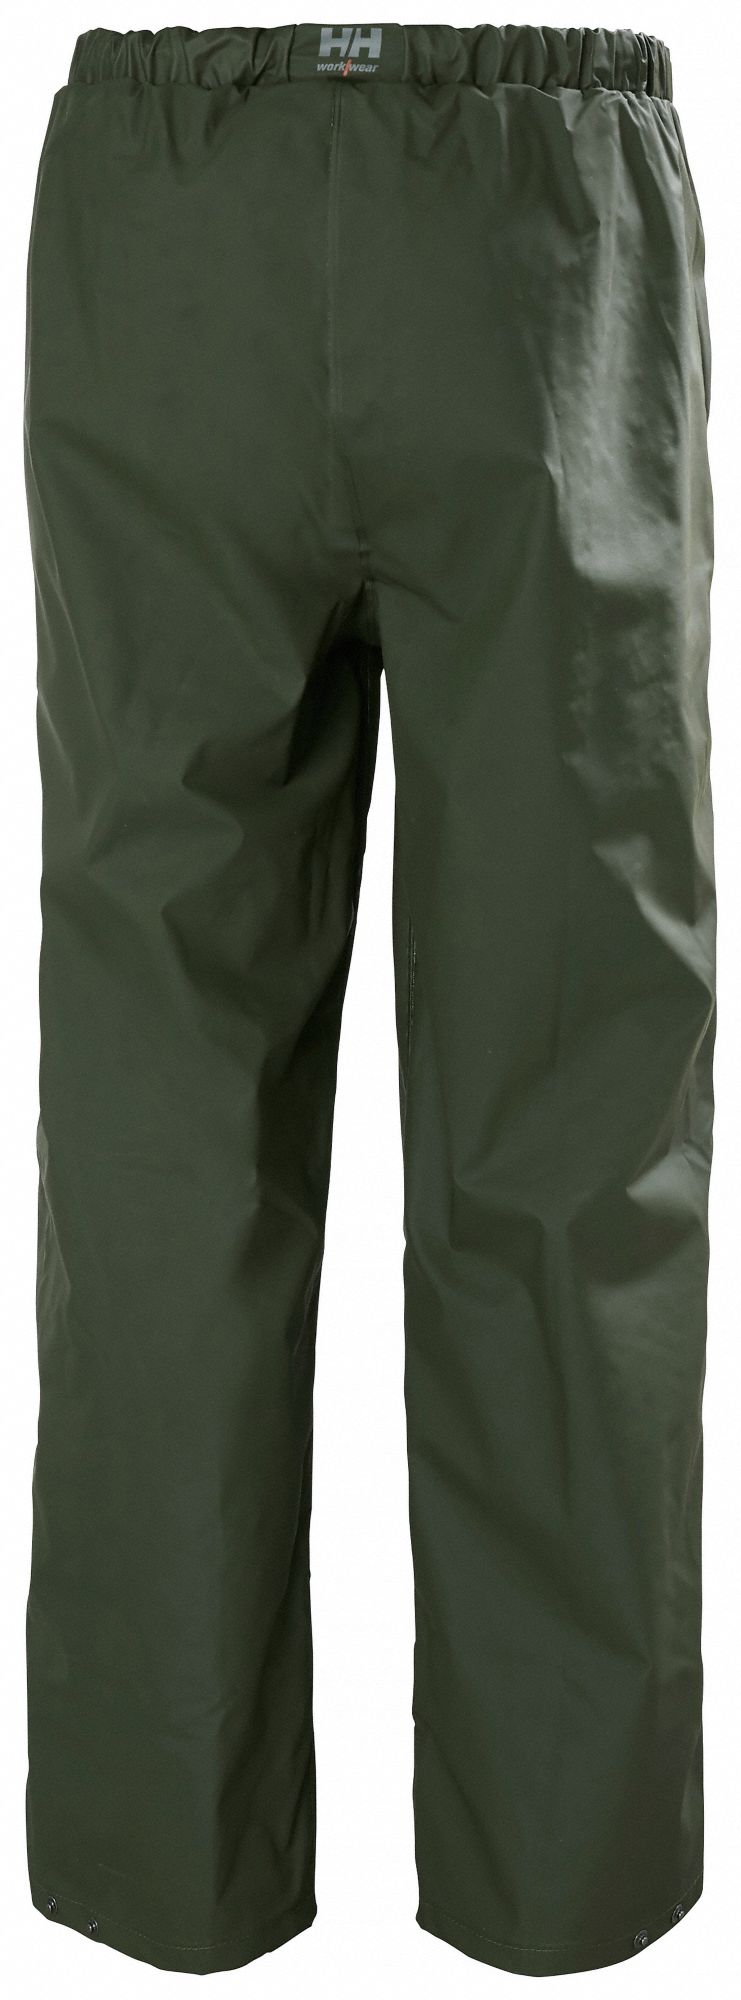 HELLY HANSEN Rain Pants: Polyester/PVC, L, Green, 33 in Inseam, 37 1/2 ...